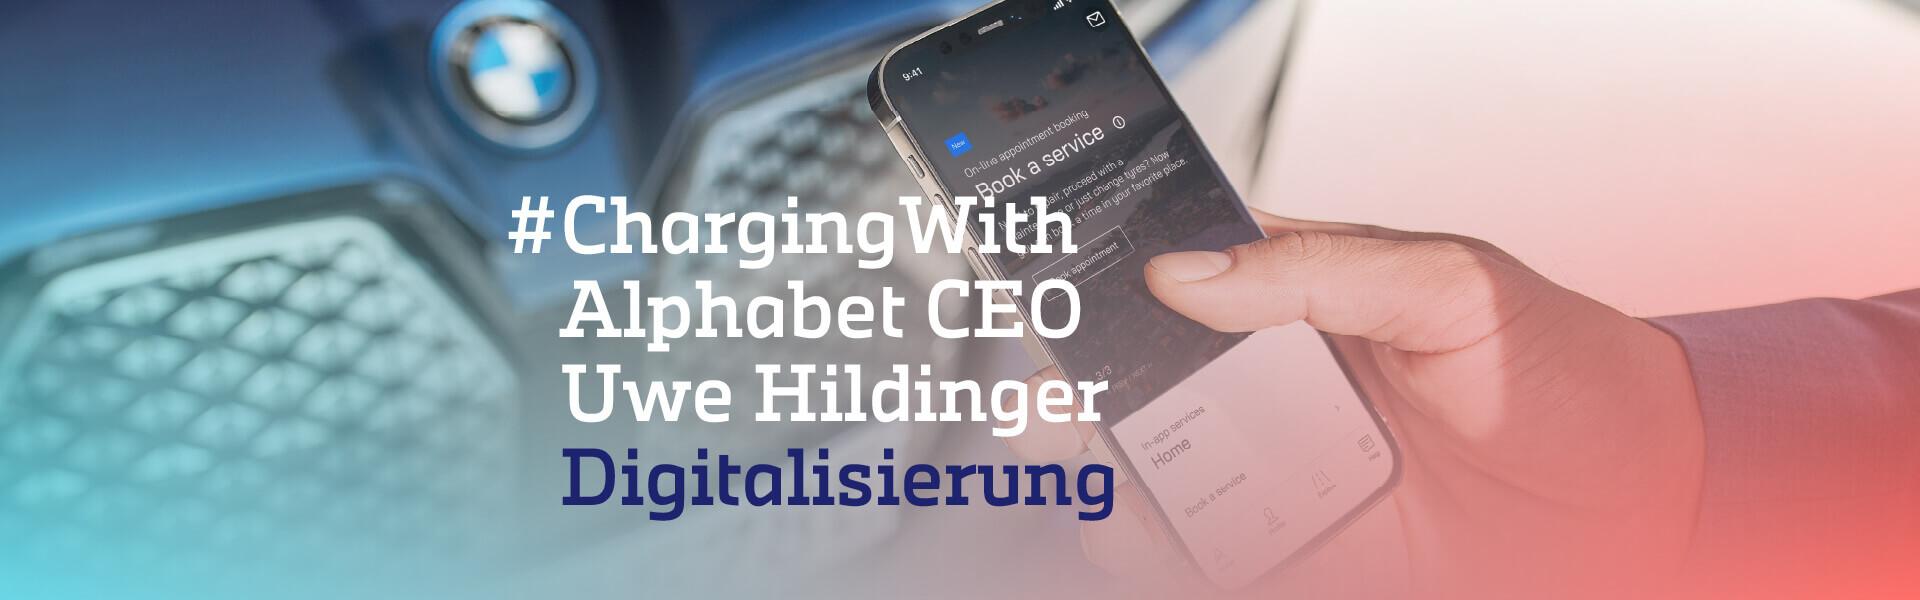 #ChargingWith Uwe Hildinger – Digitalisierung